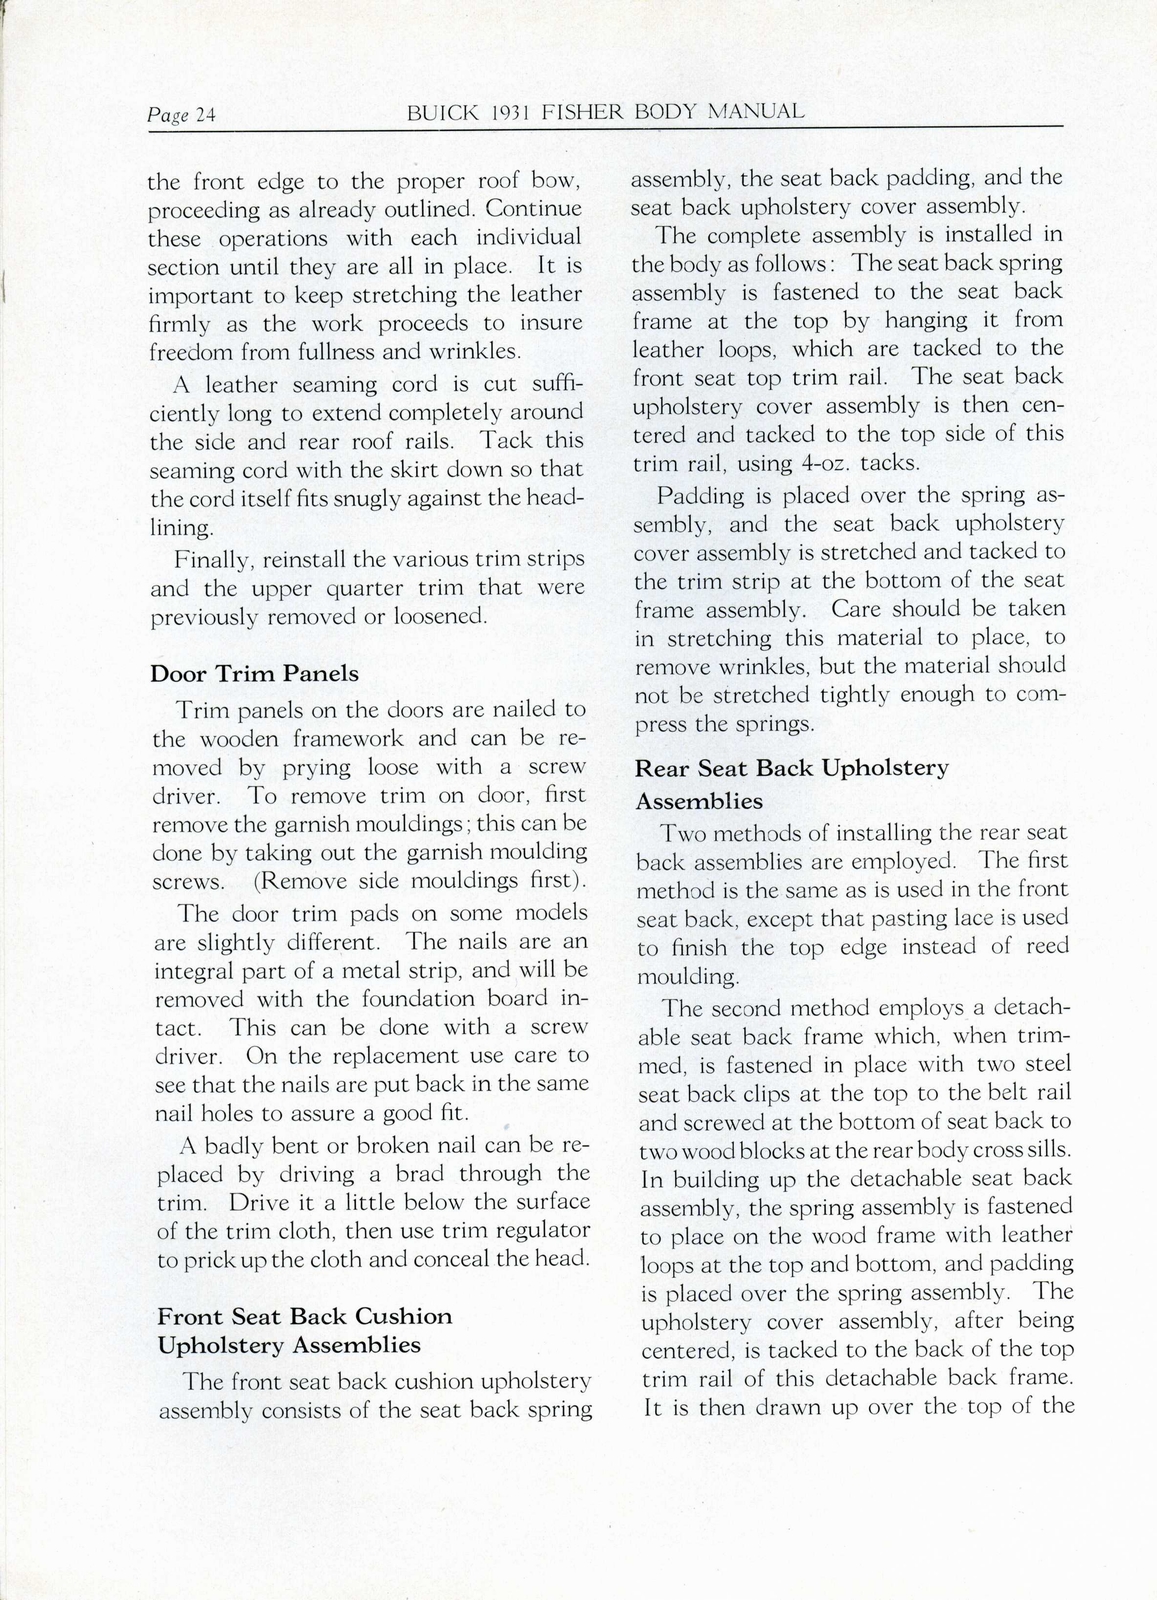 n_1931 Buick Fisher Body Manual-24.jpg